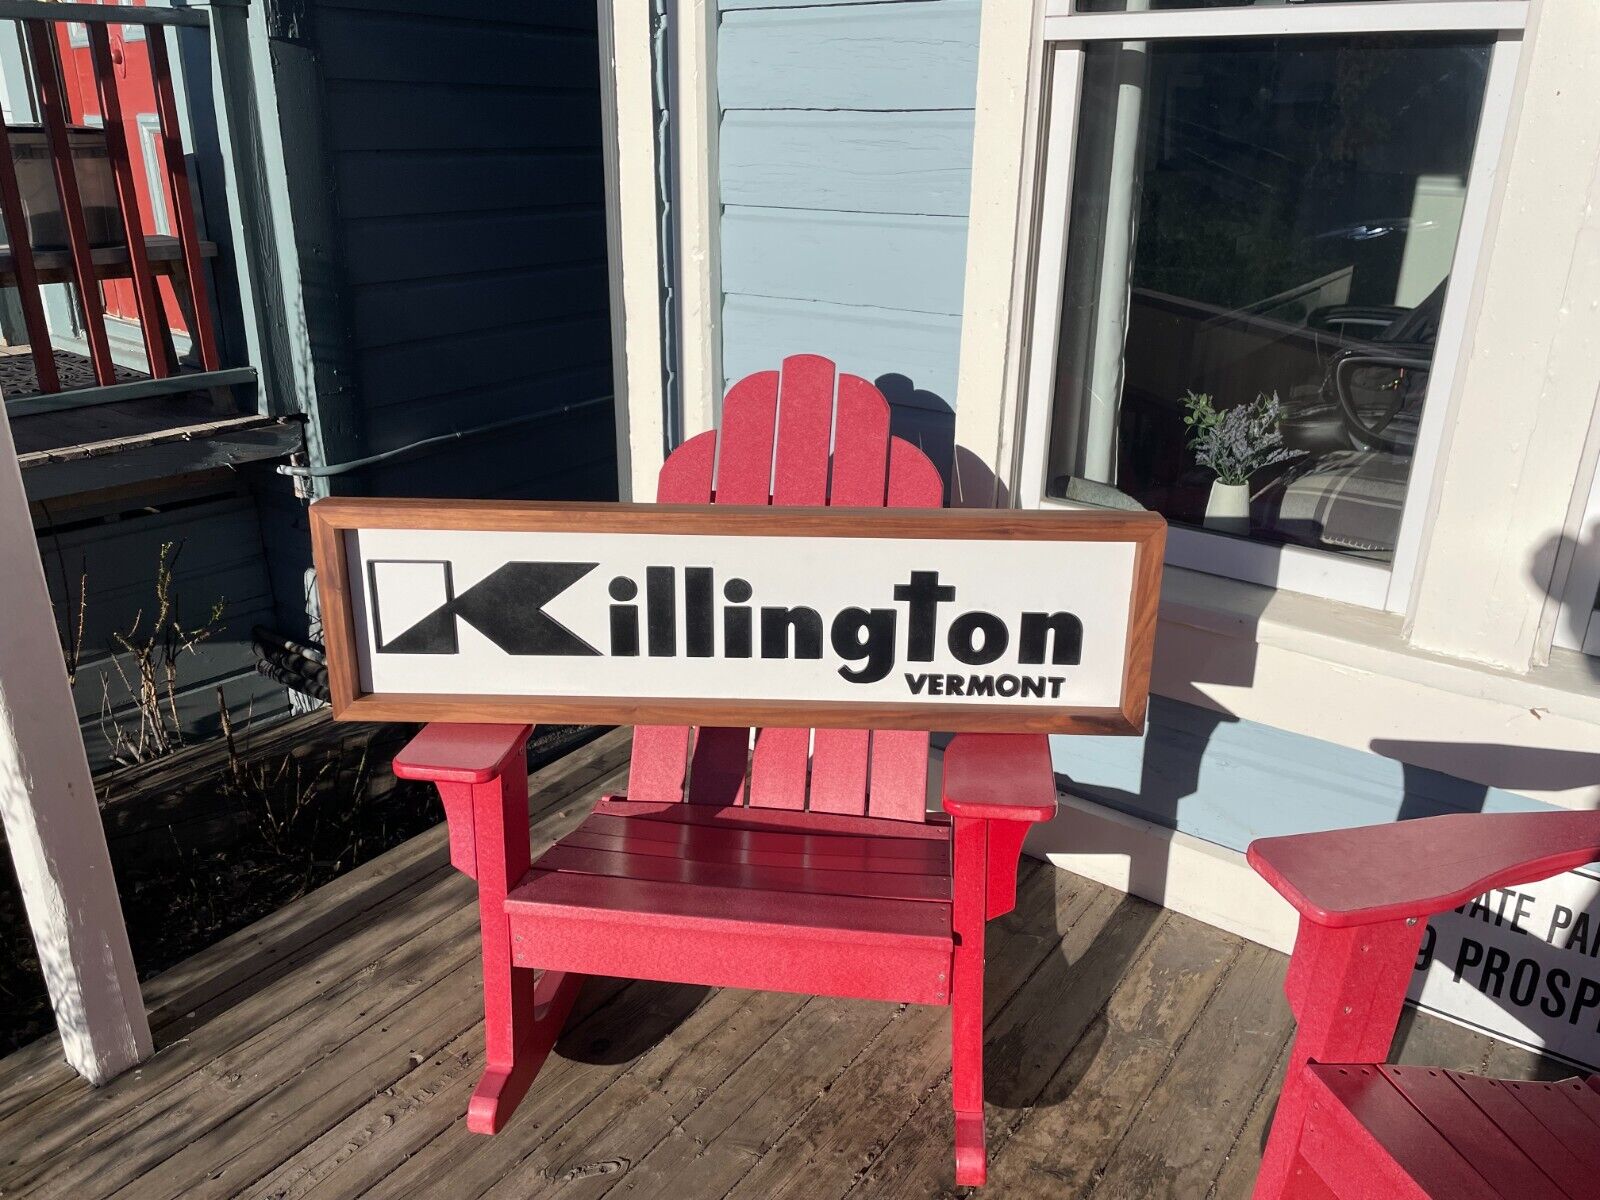 Very large old style Killington logo sign walnut wrapped